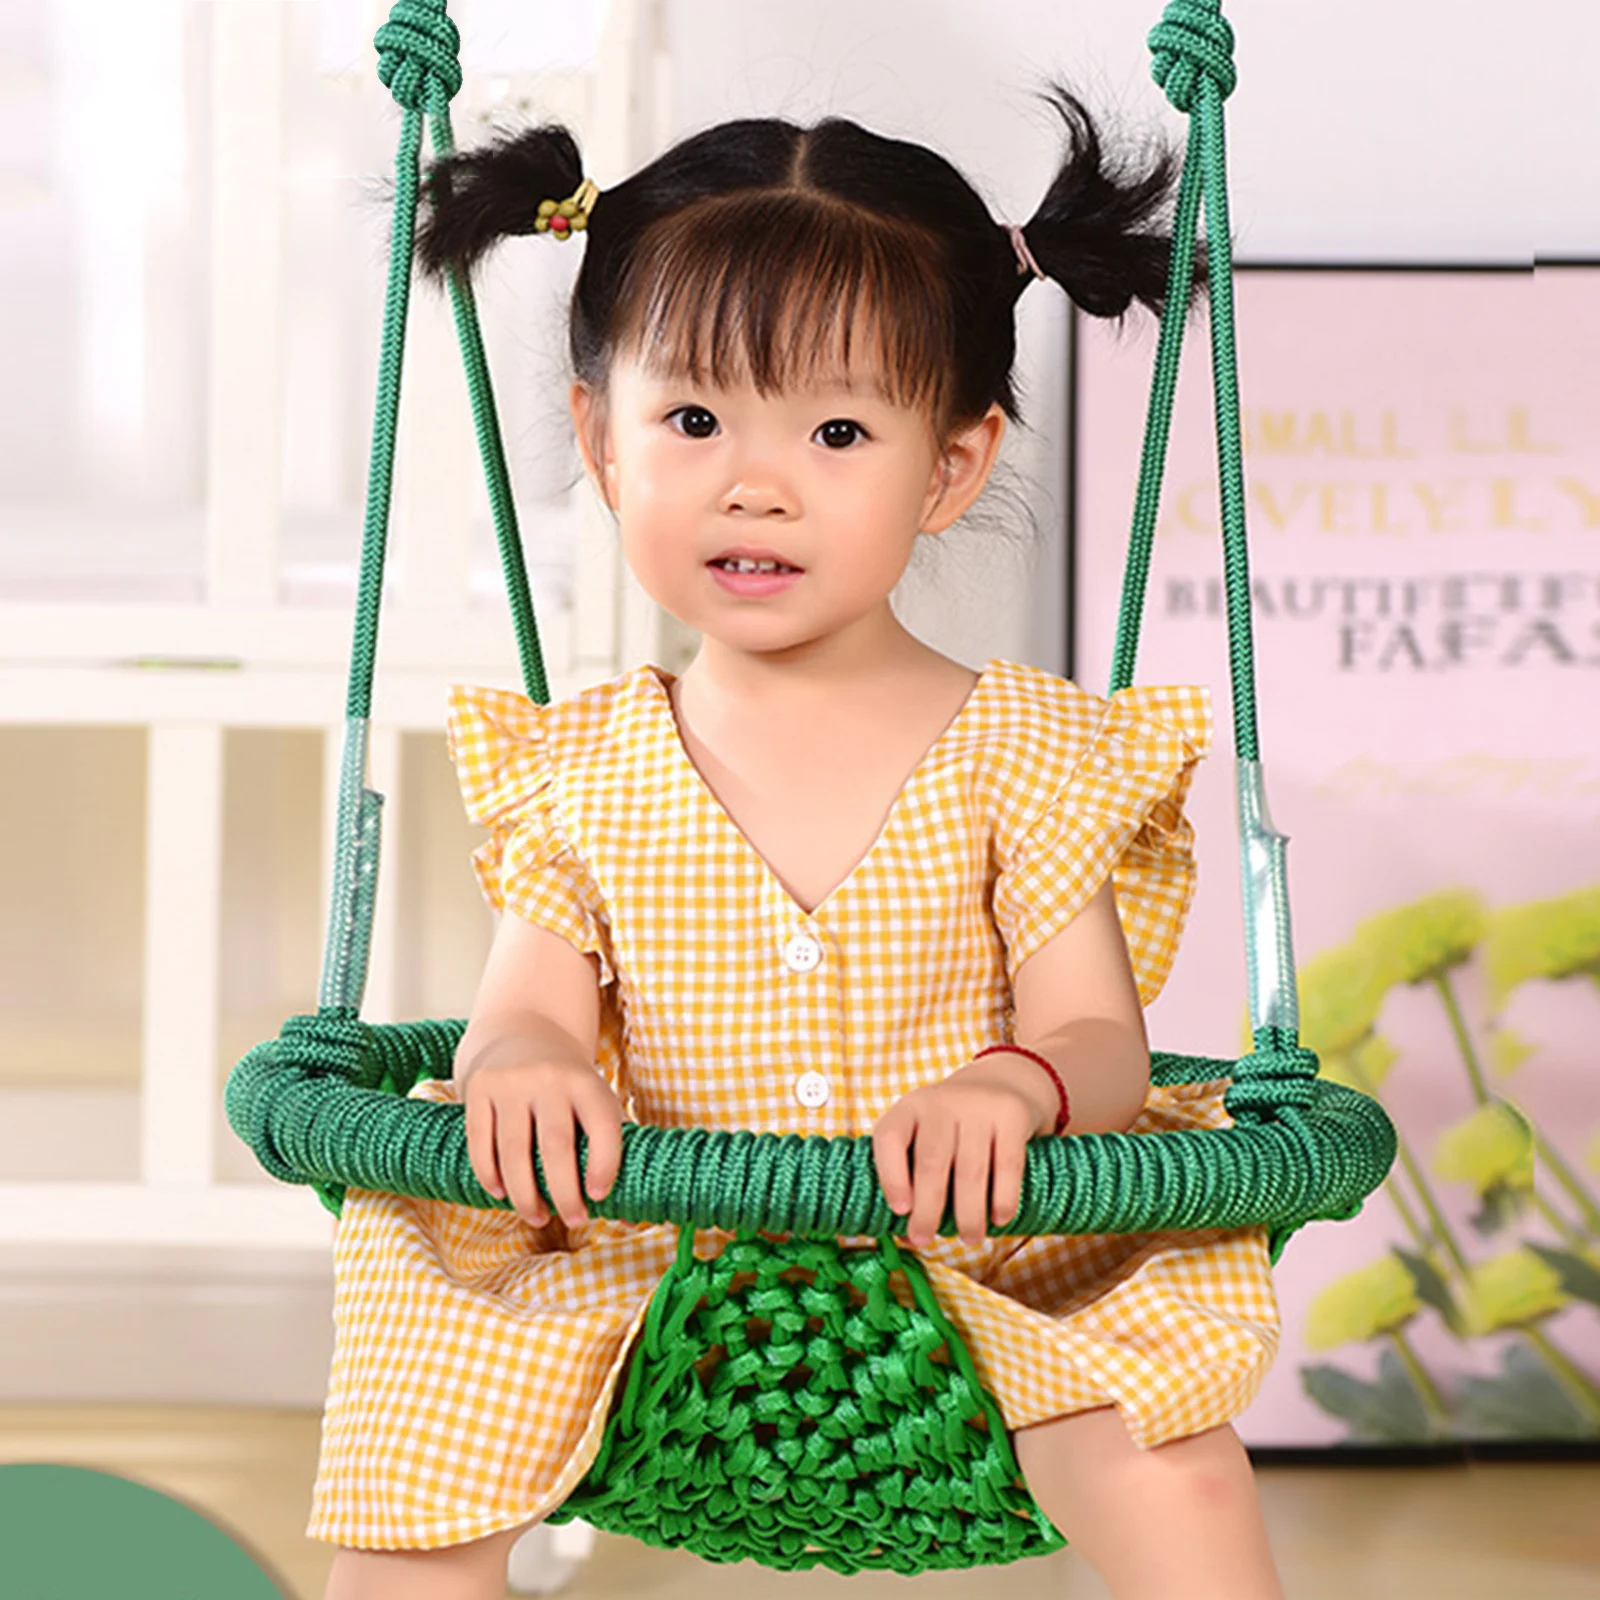 Kids Swing Set Hand-Knitting Swing Seat Chair w/ Hooks Portable Easy Design Home Playset Swingset Fun Play Toy Decor